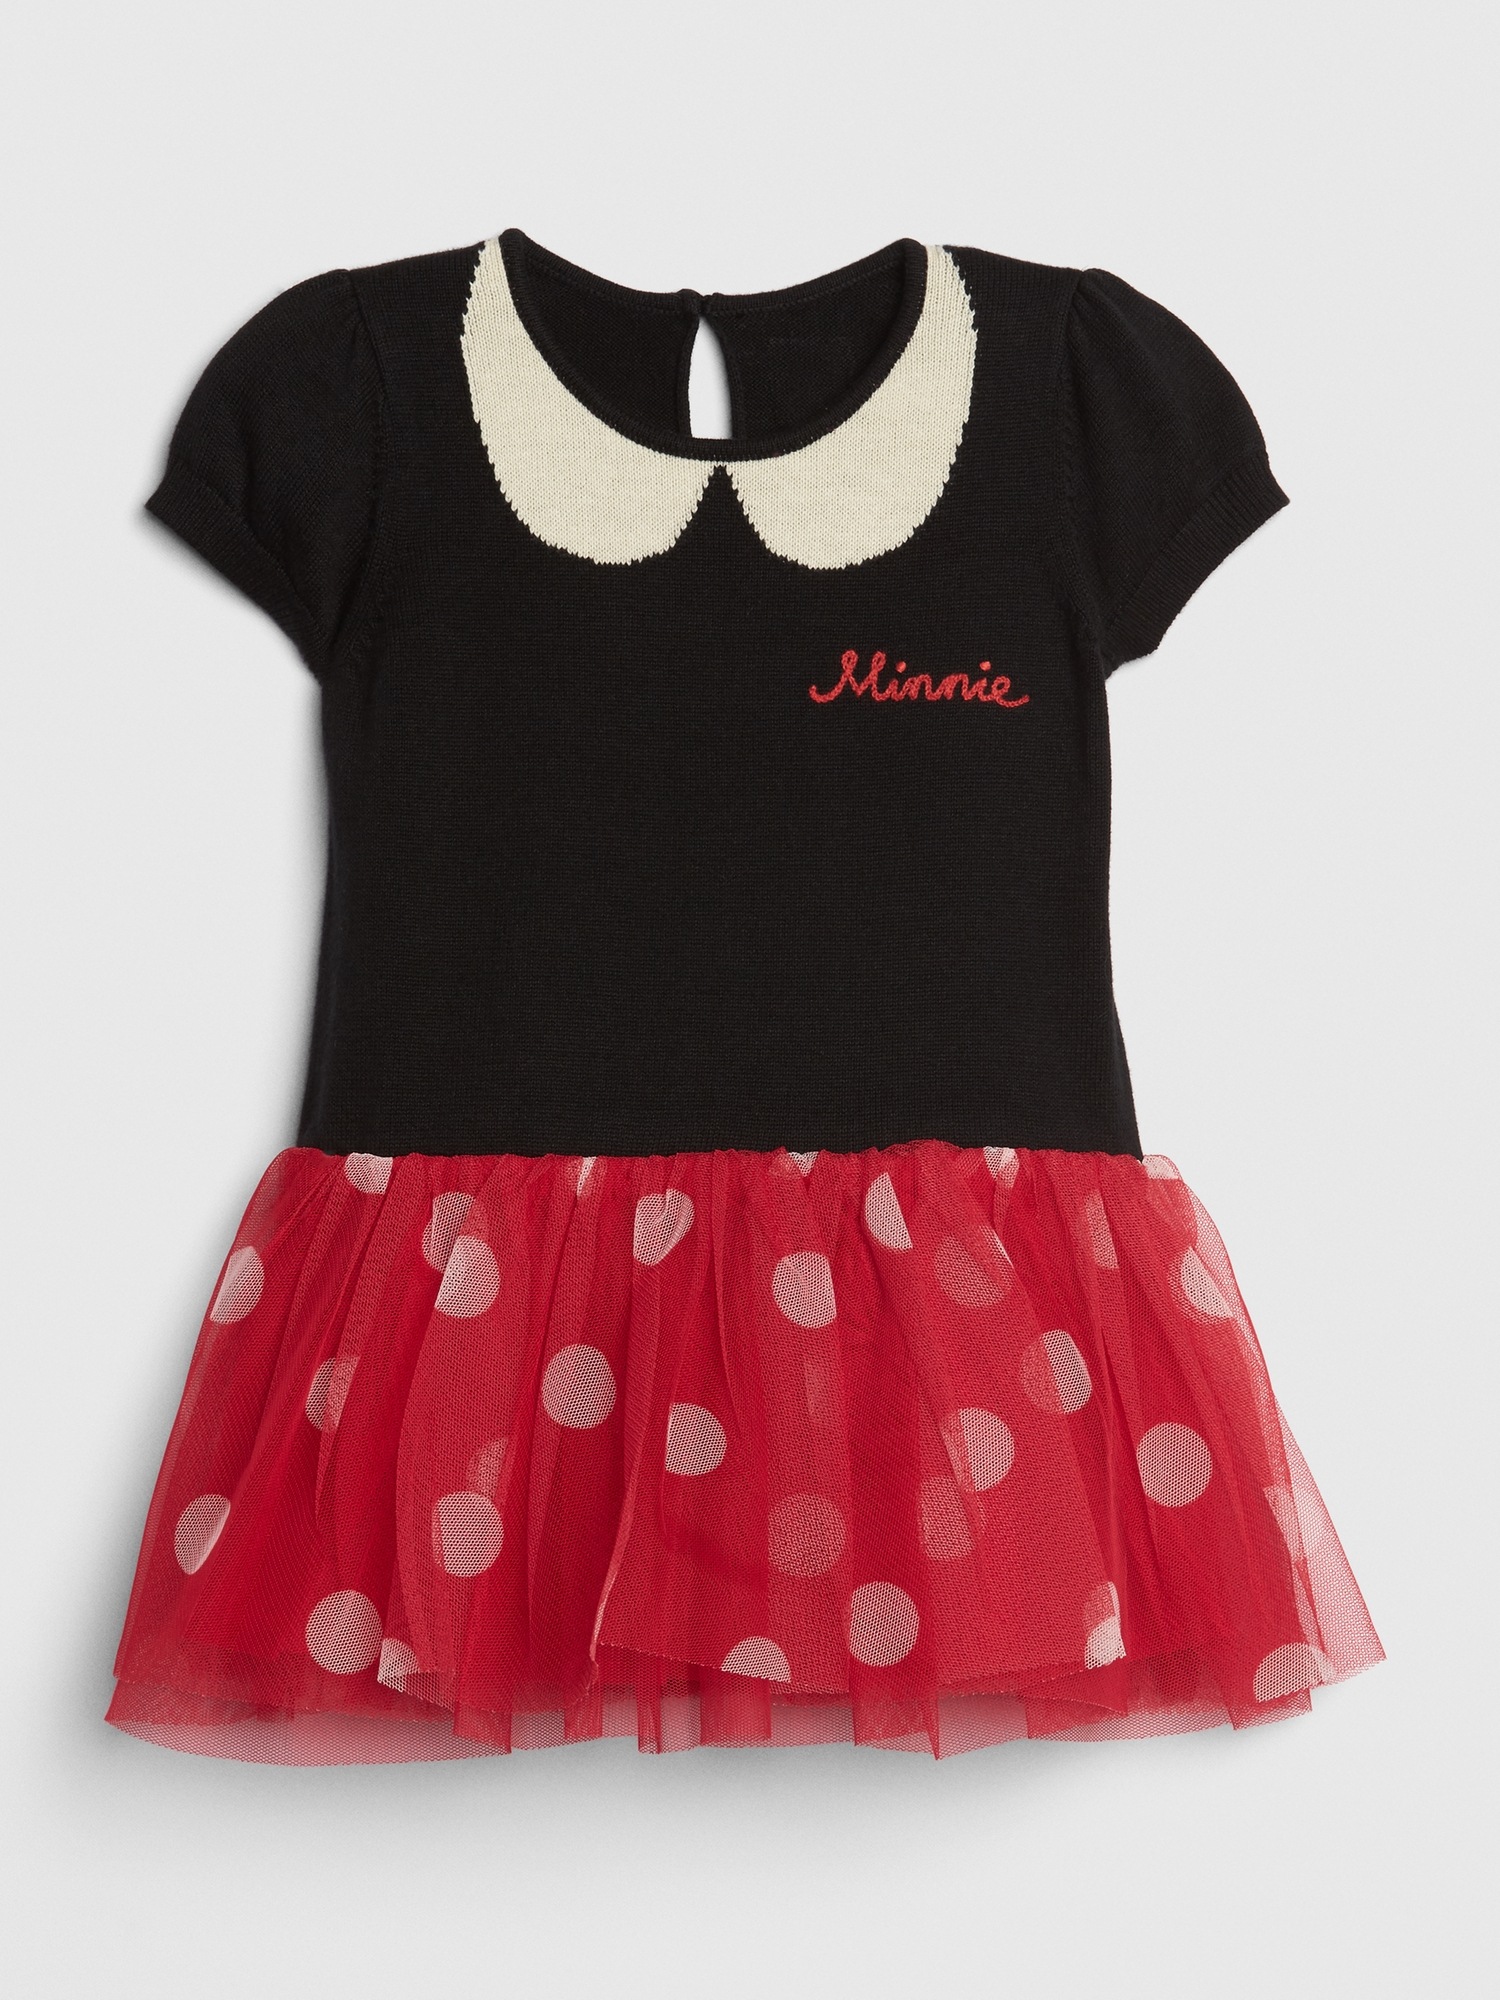 babyGap \u0026#124 Disney Minnie Mouse Dress 